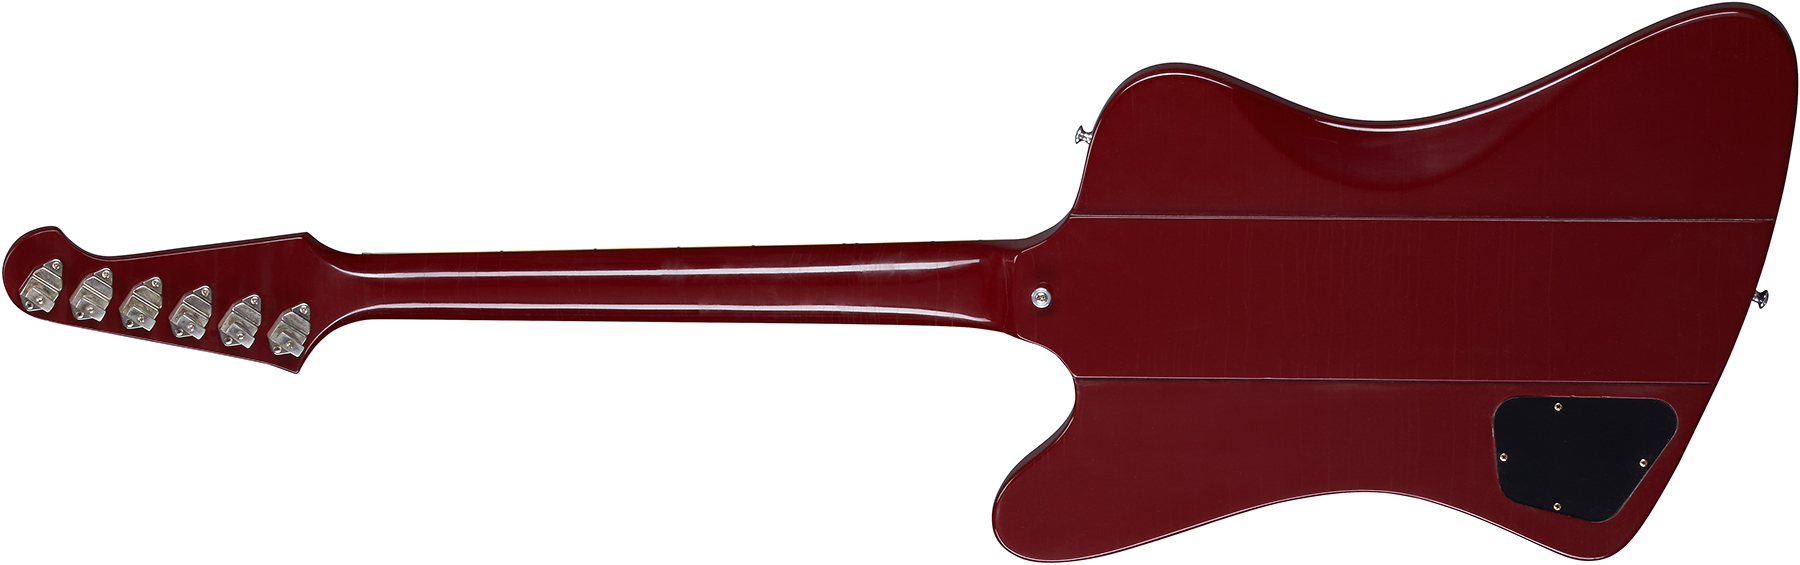 Gibson Custom Shop Murphy Lab Firebird 1963 Maestro Reissue Trem 2mh Rw - Light Aged Cardinal Red - Guitarra electrica retro rock - Variation 1